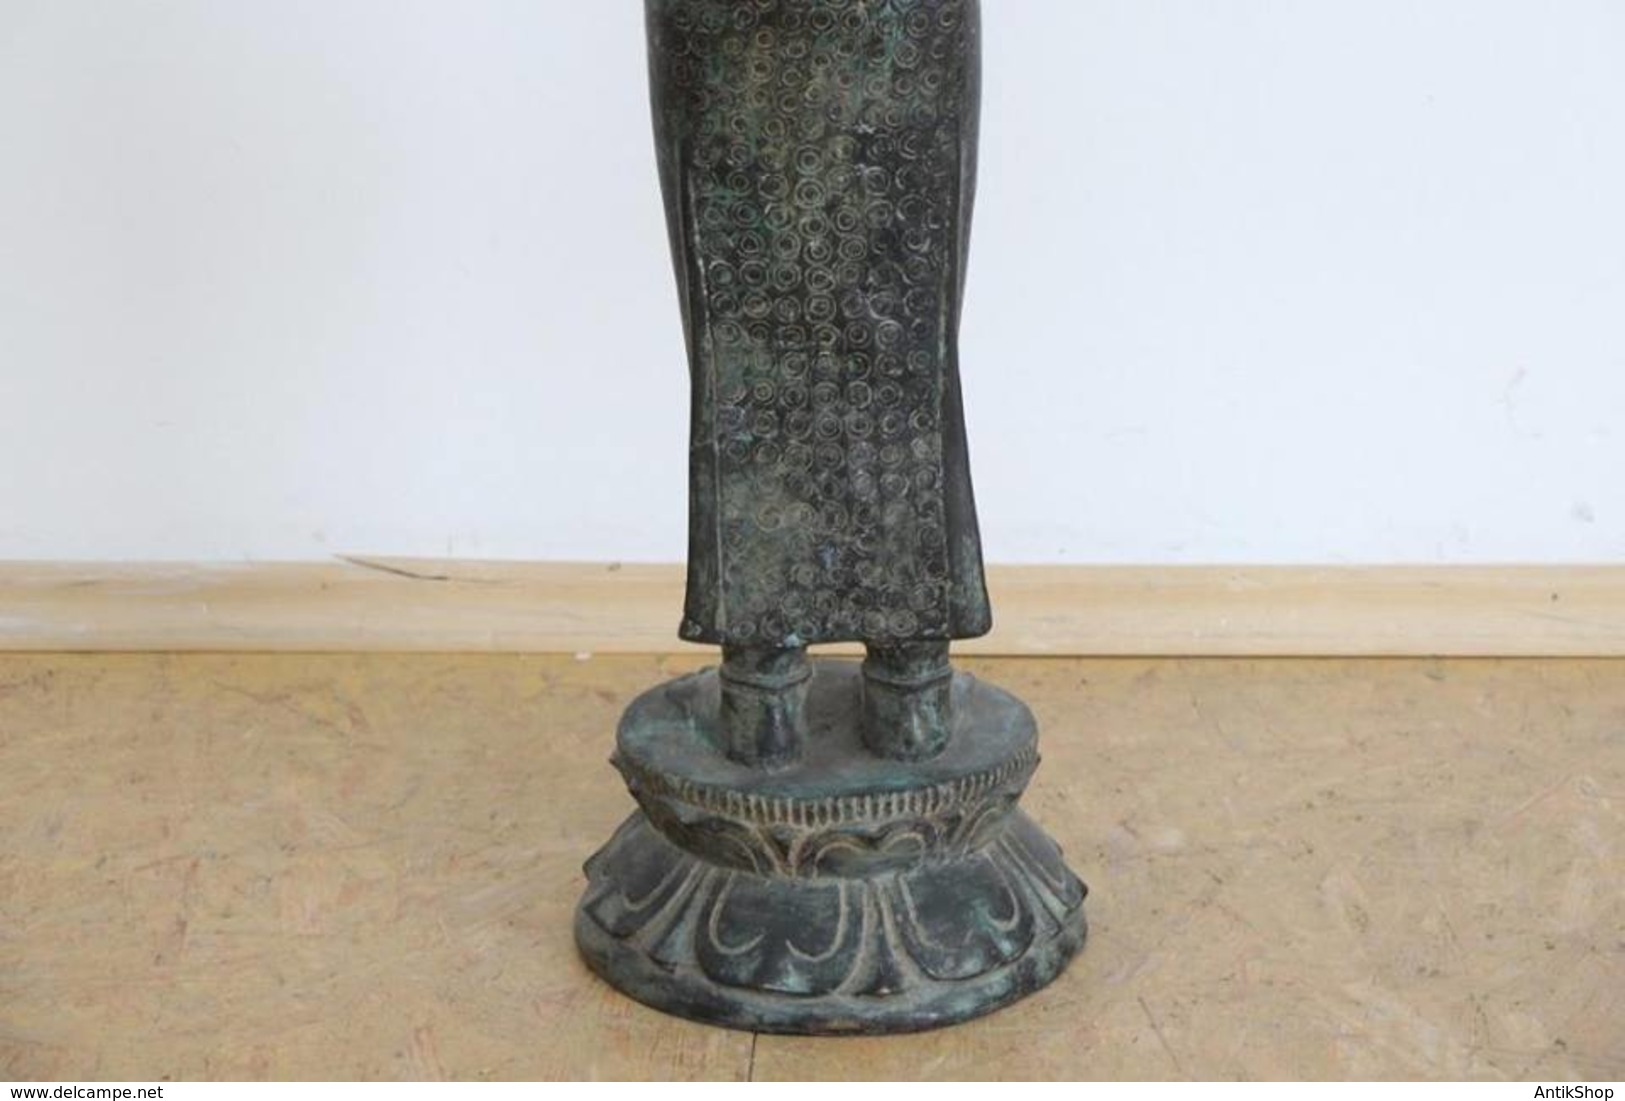 Shiva 17/18 Jh. China Skulptur, Bronze, sculpture Antik COA